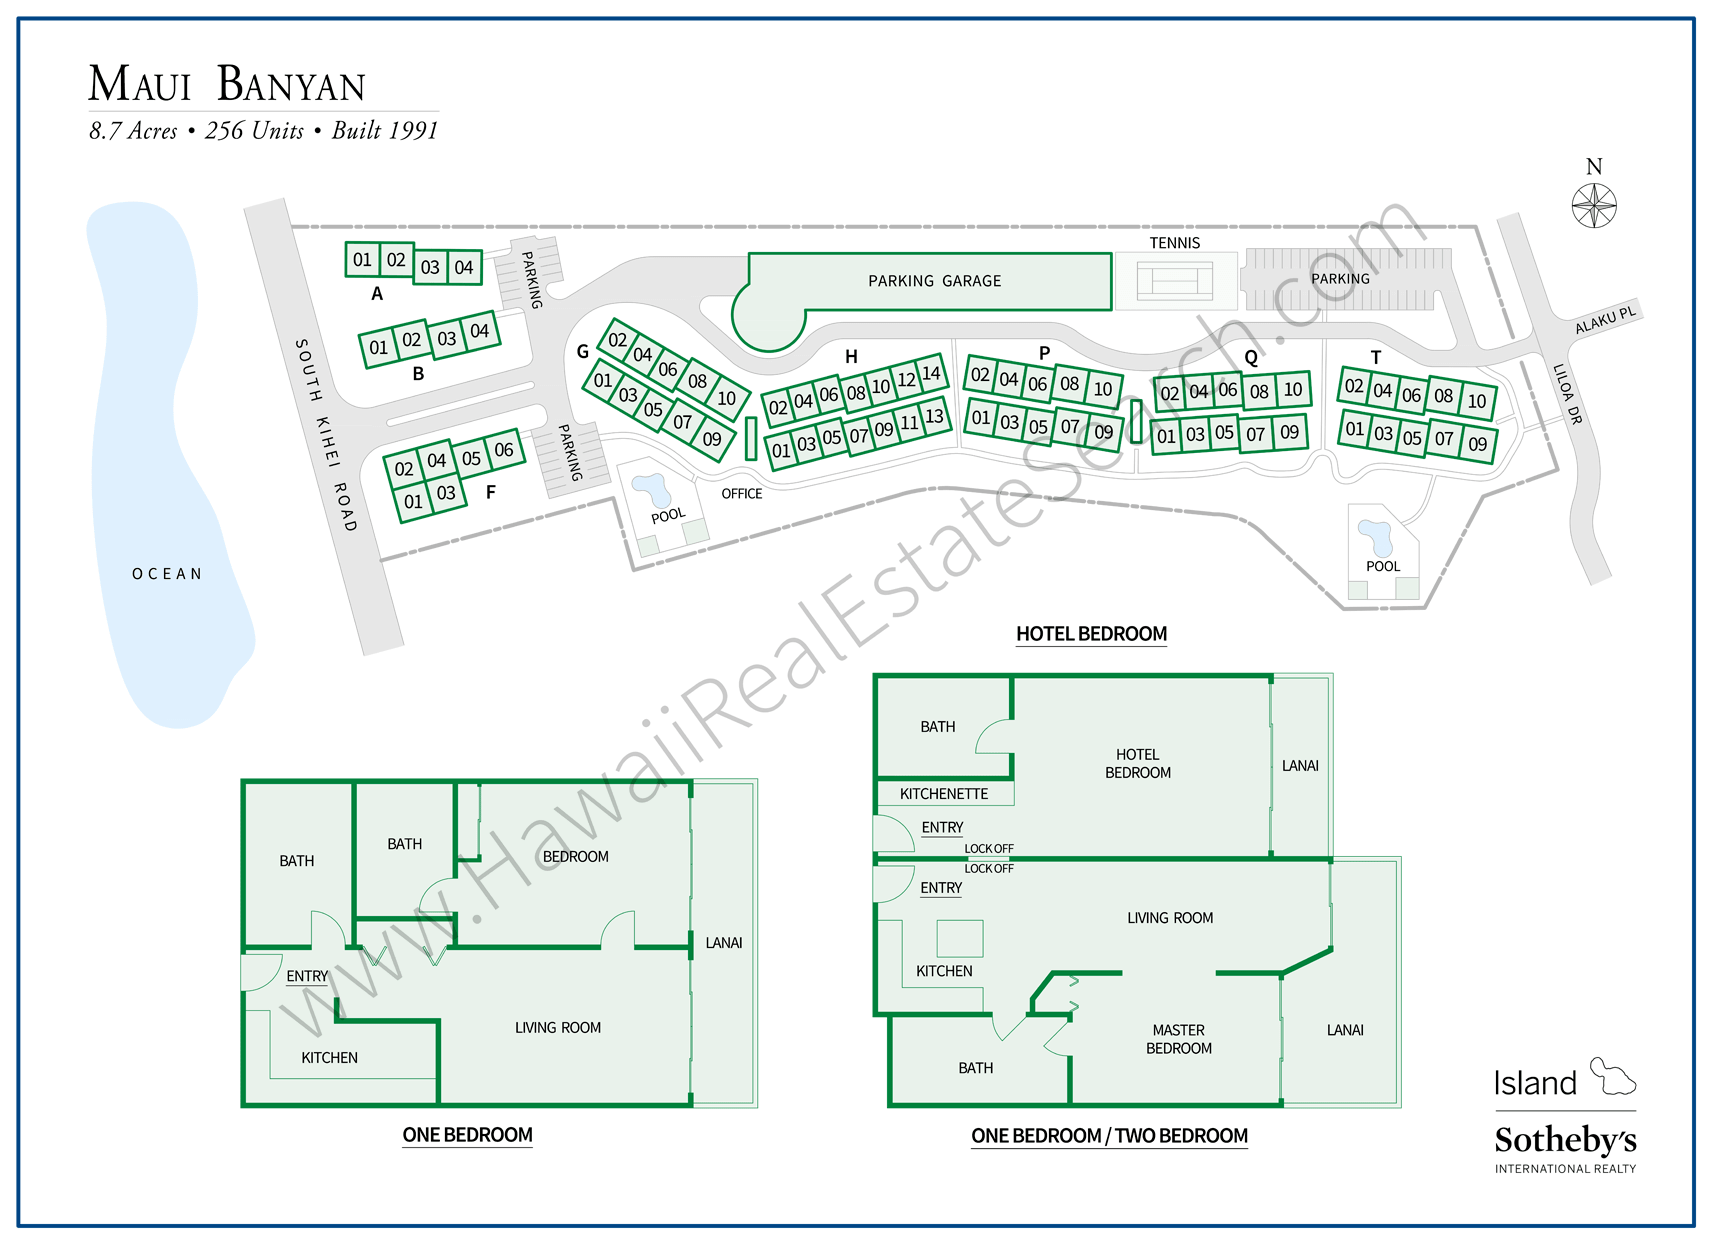 Maui Banyan Floor Plan and Map